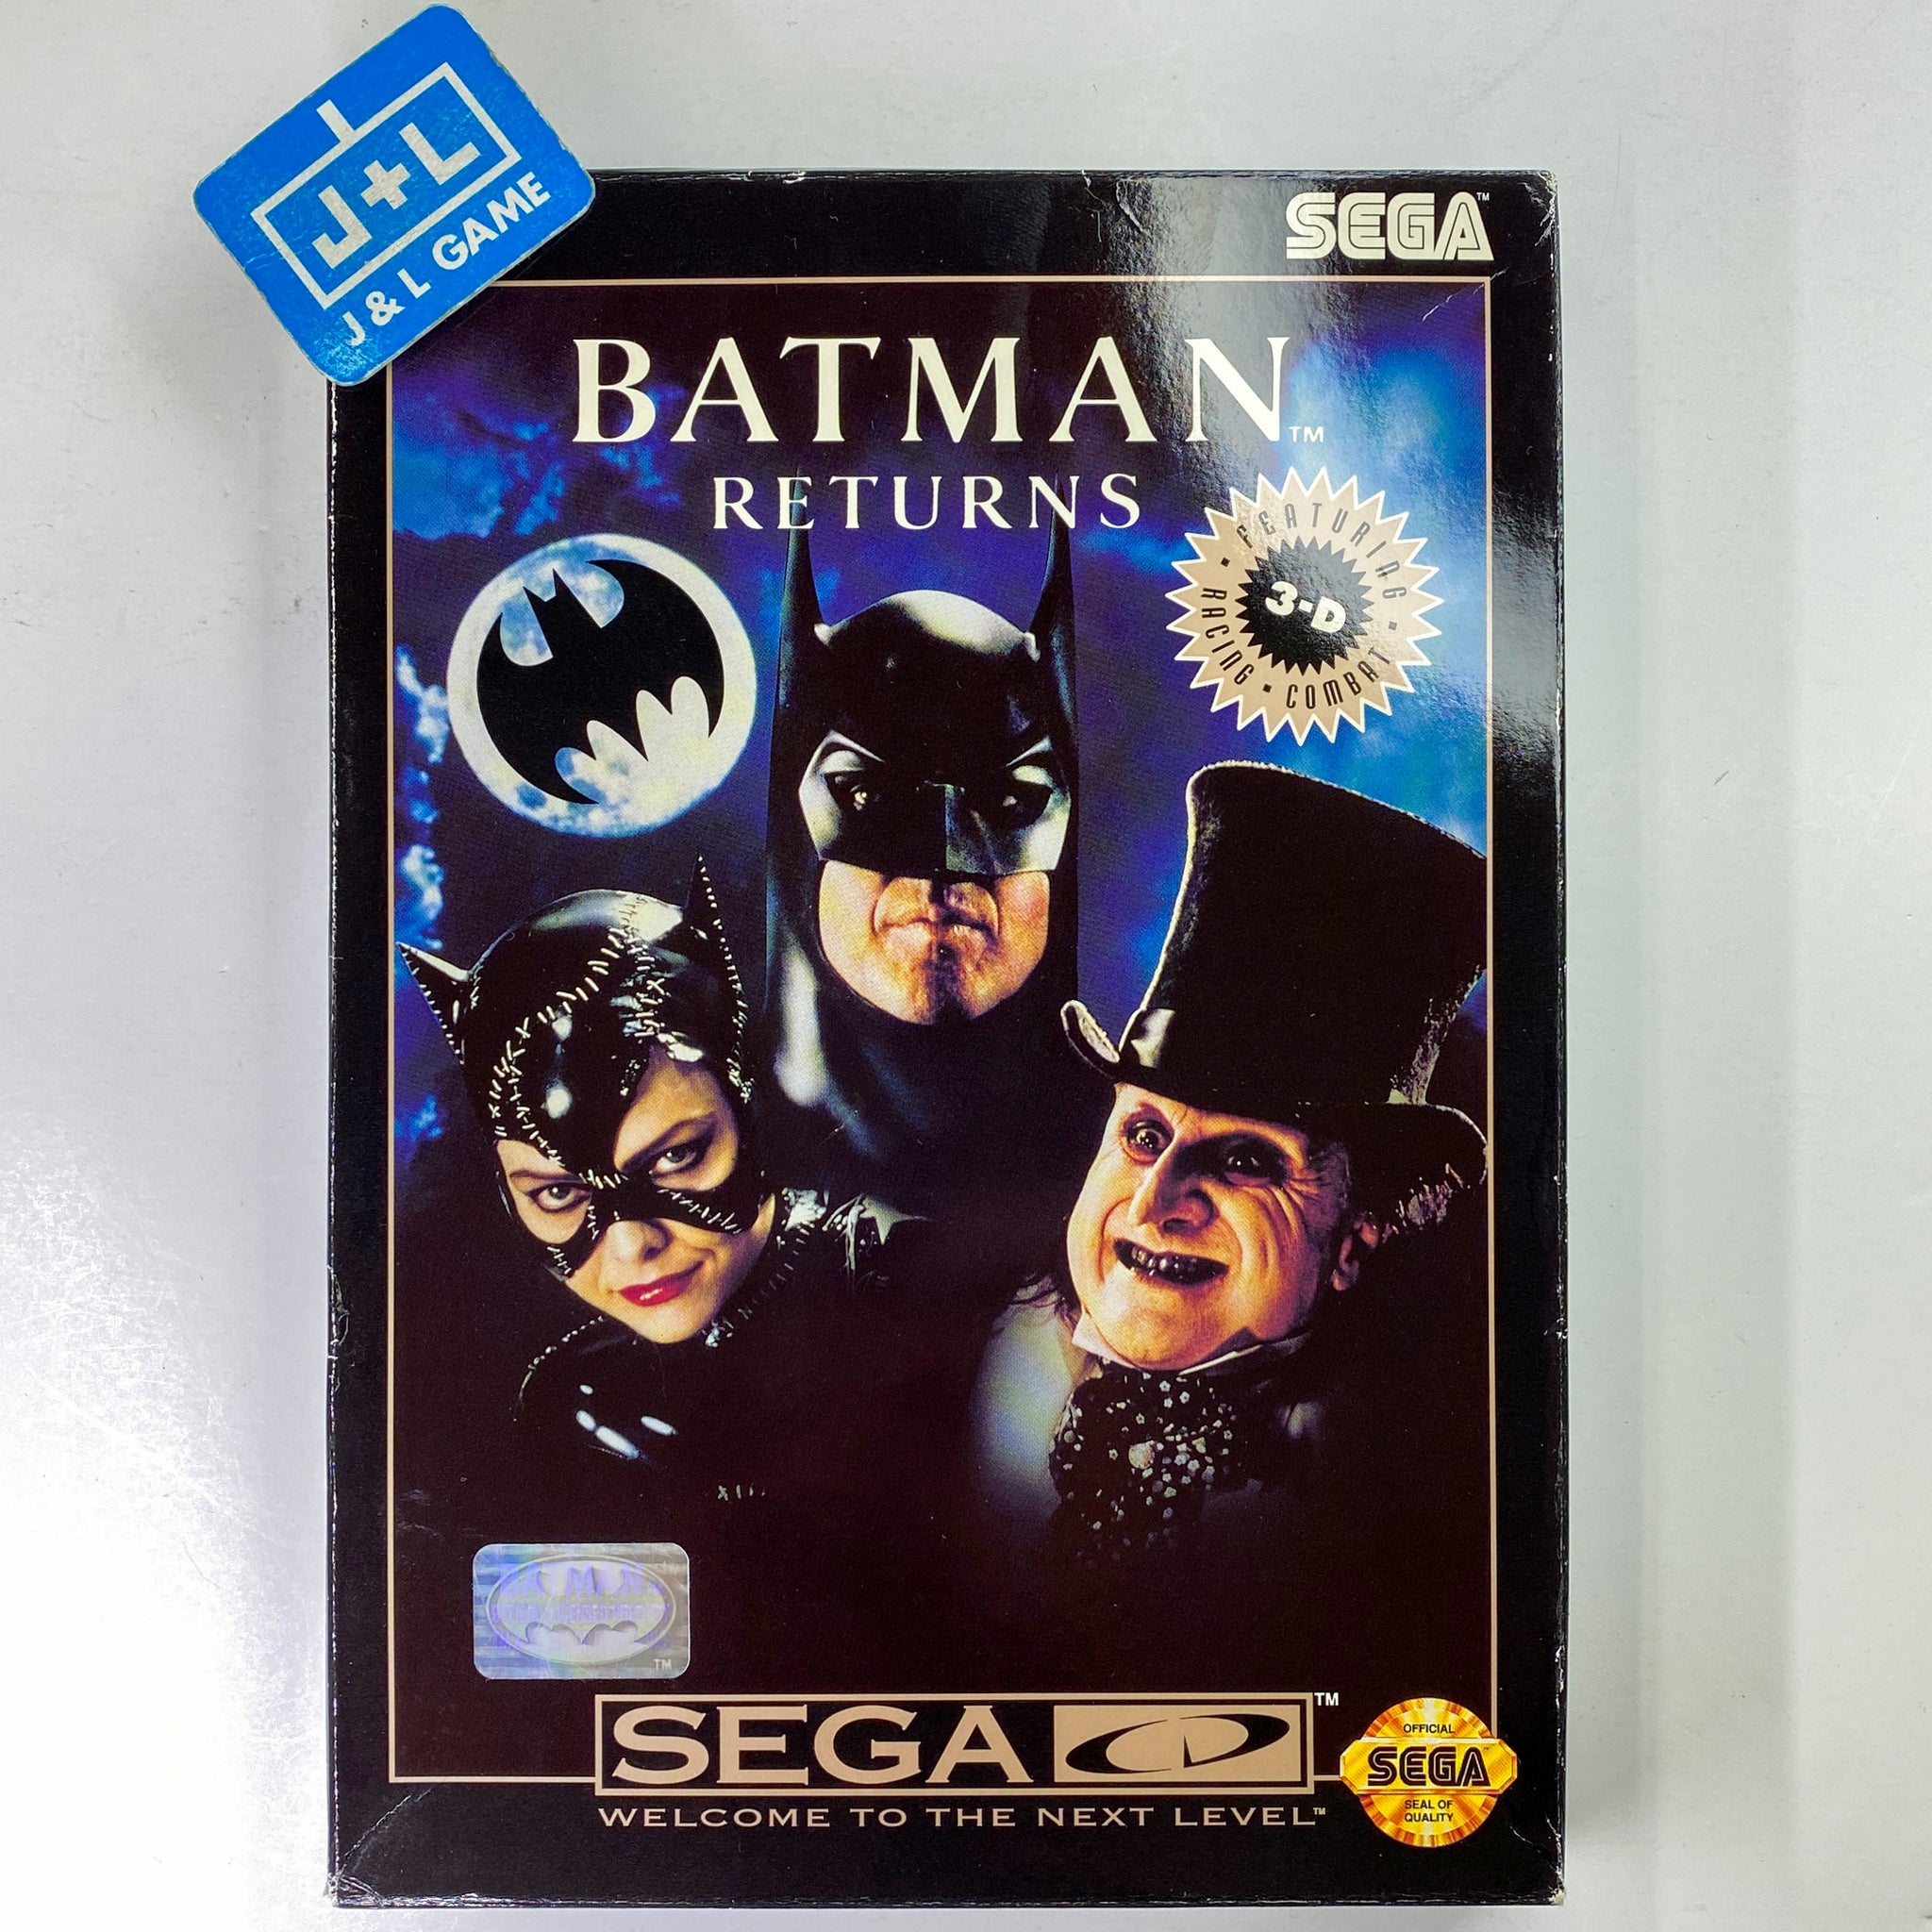 Batman Returns - SEGA CD [Pre-Owned] – J&L Video Games New York City